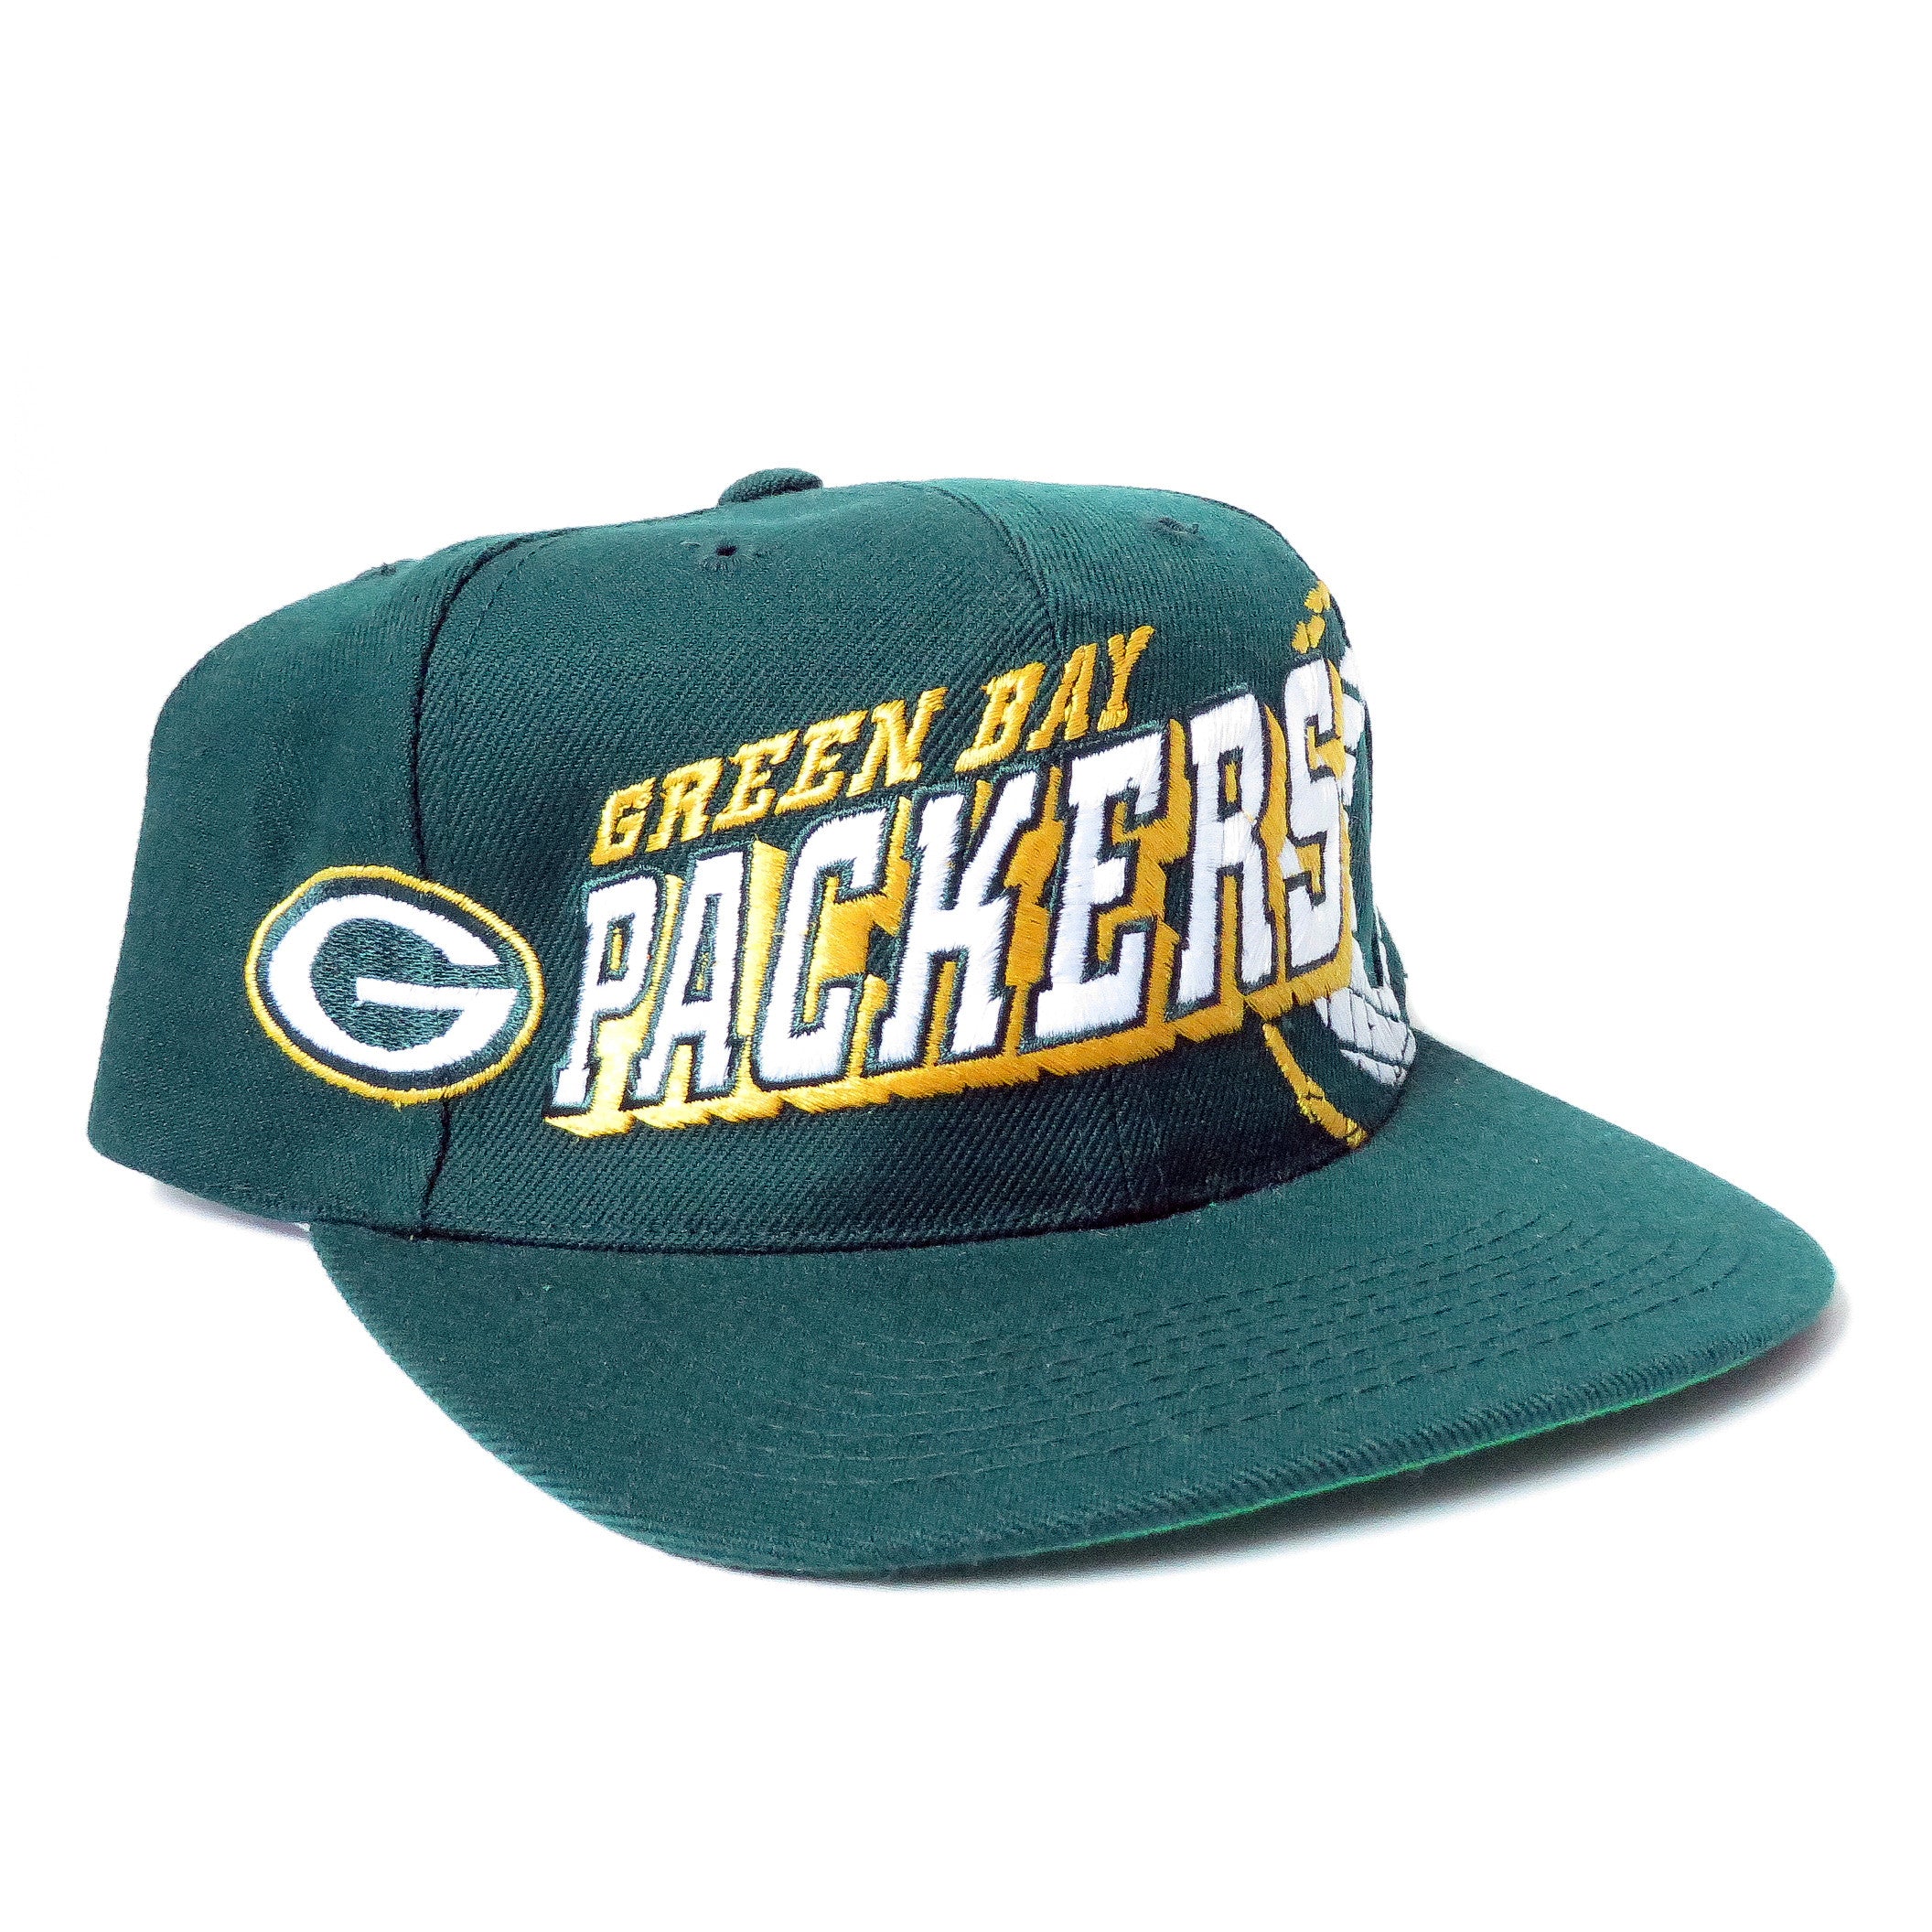 Vintage Green Bay Packers Sports Specialties Snapback Hat